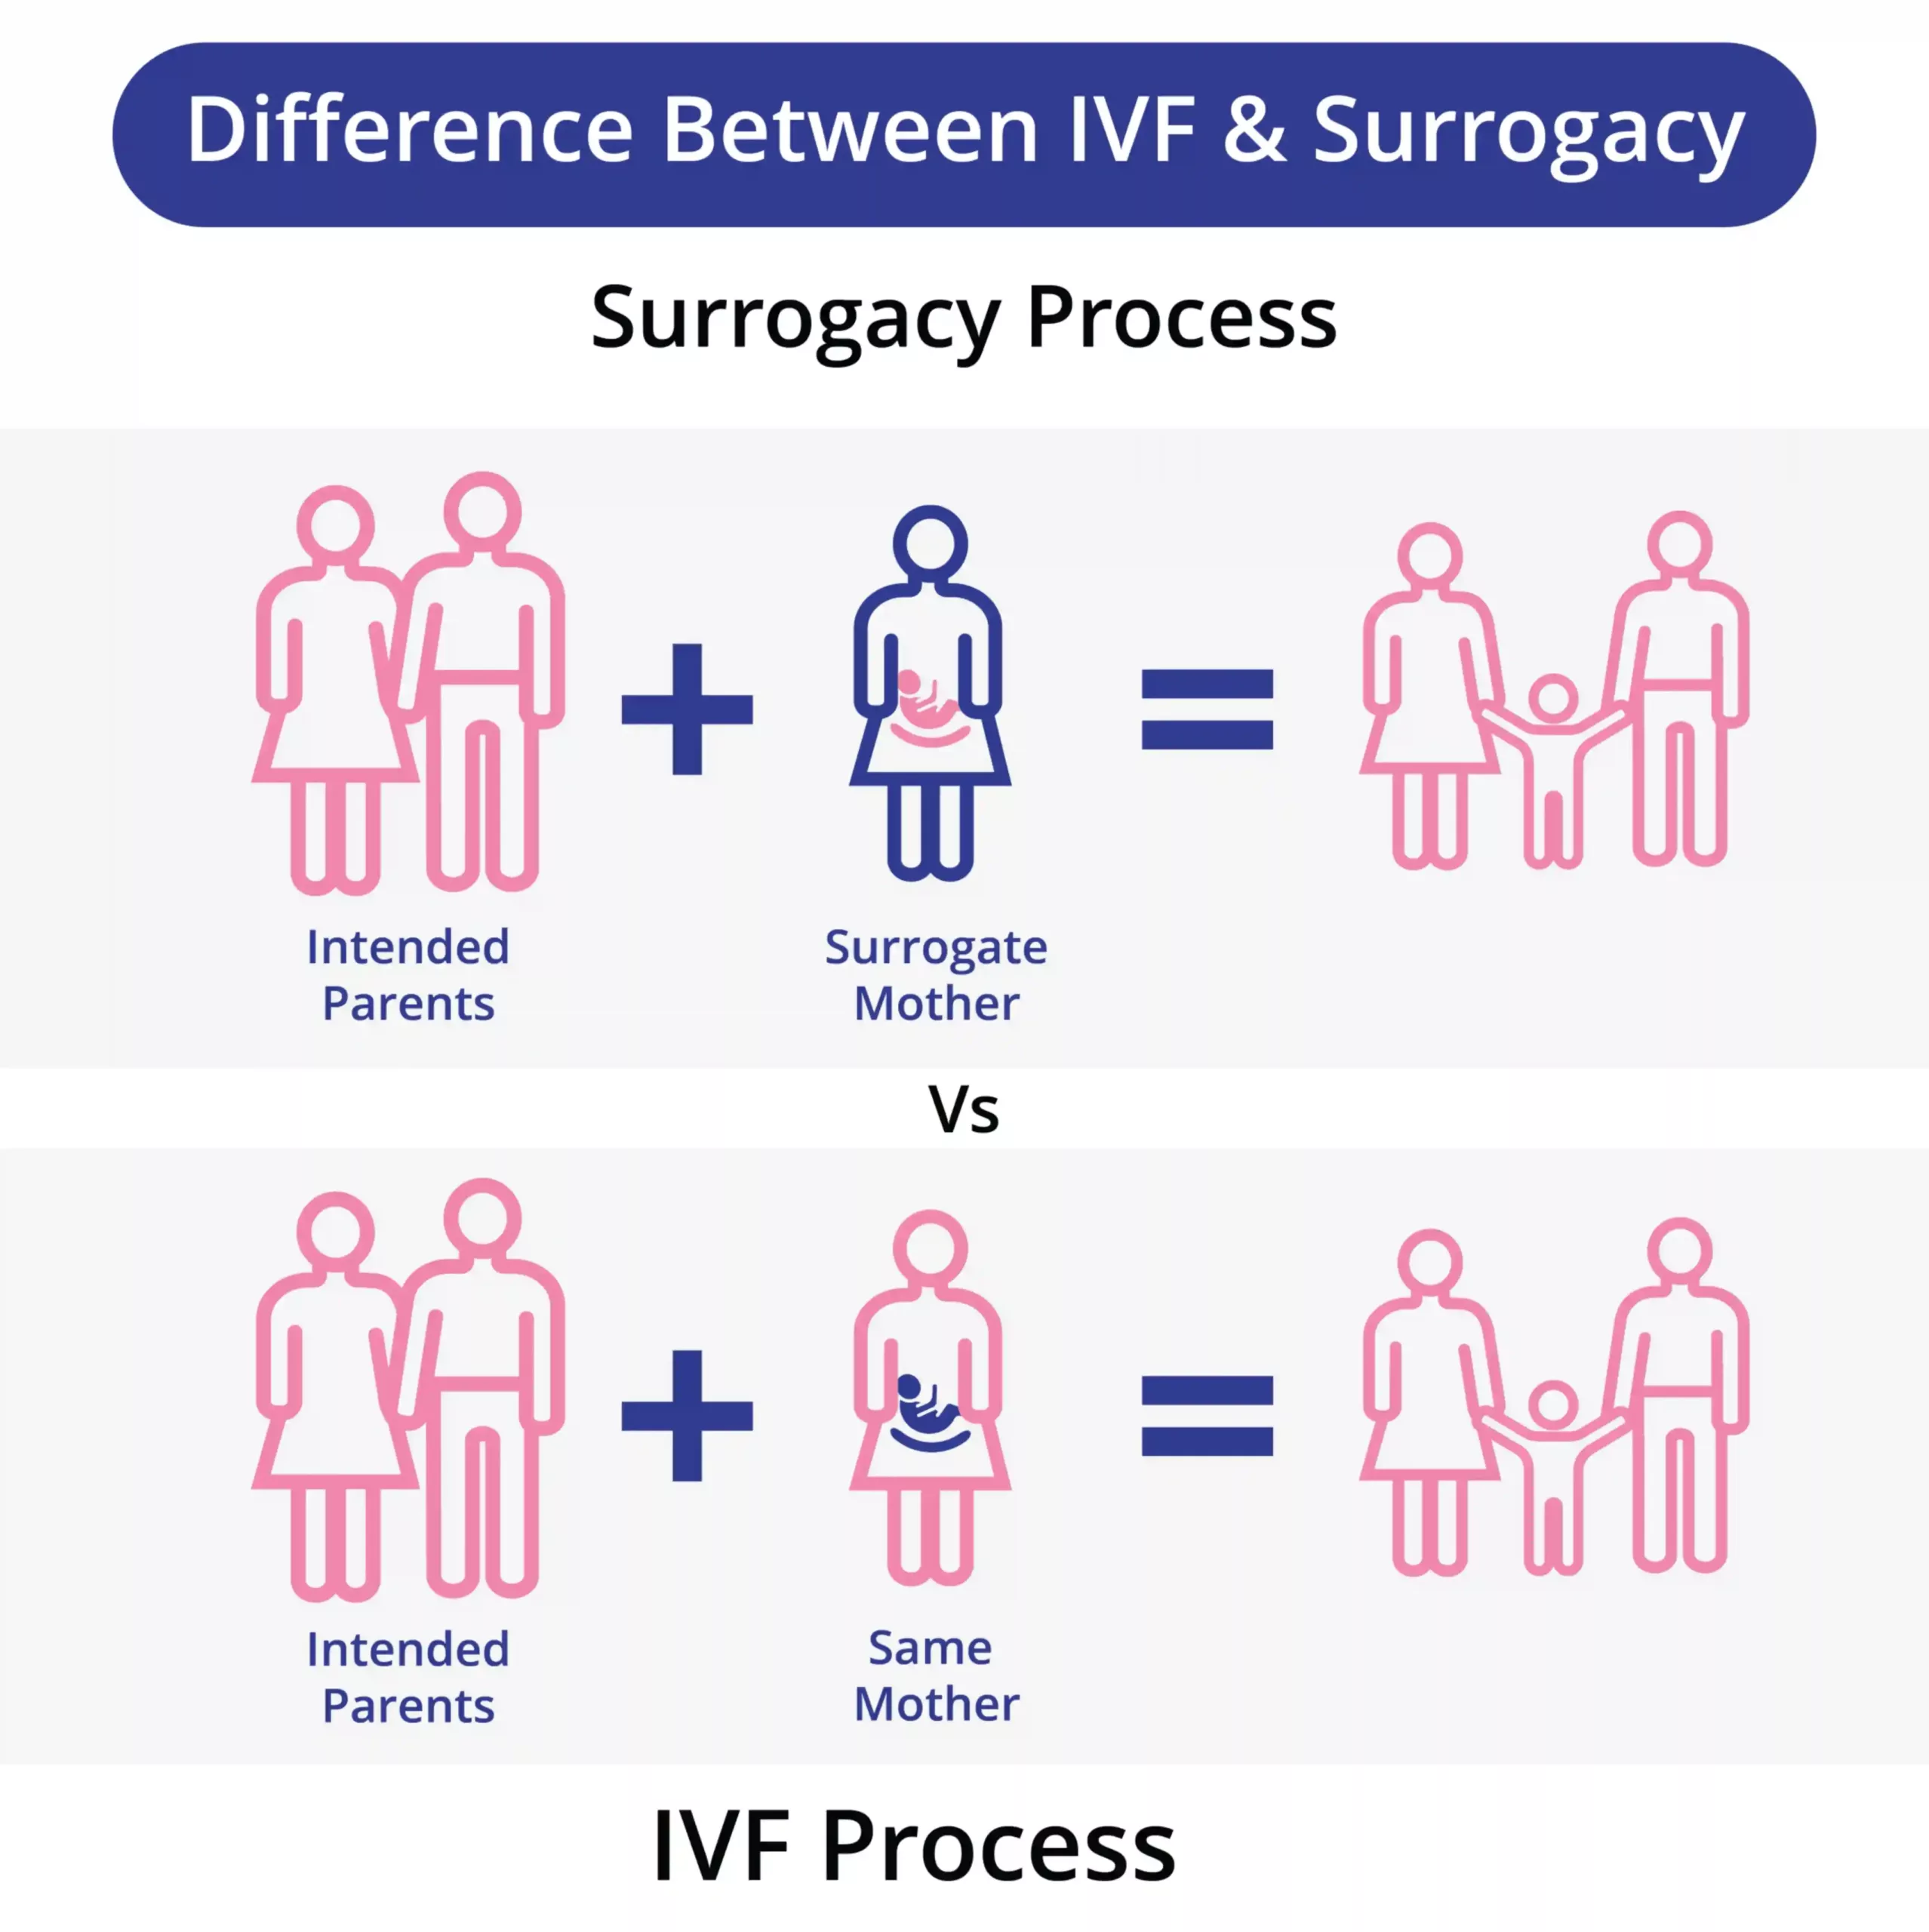 IVF Vs வாடகைத்தாய்